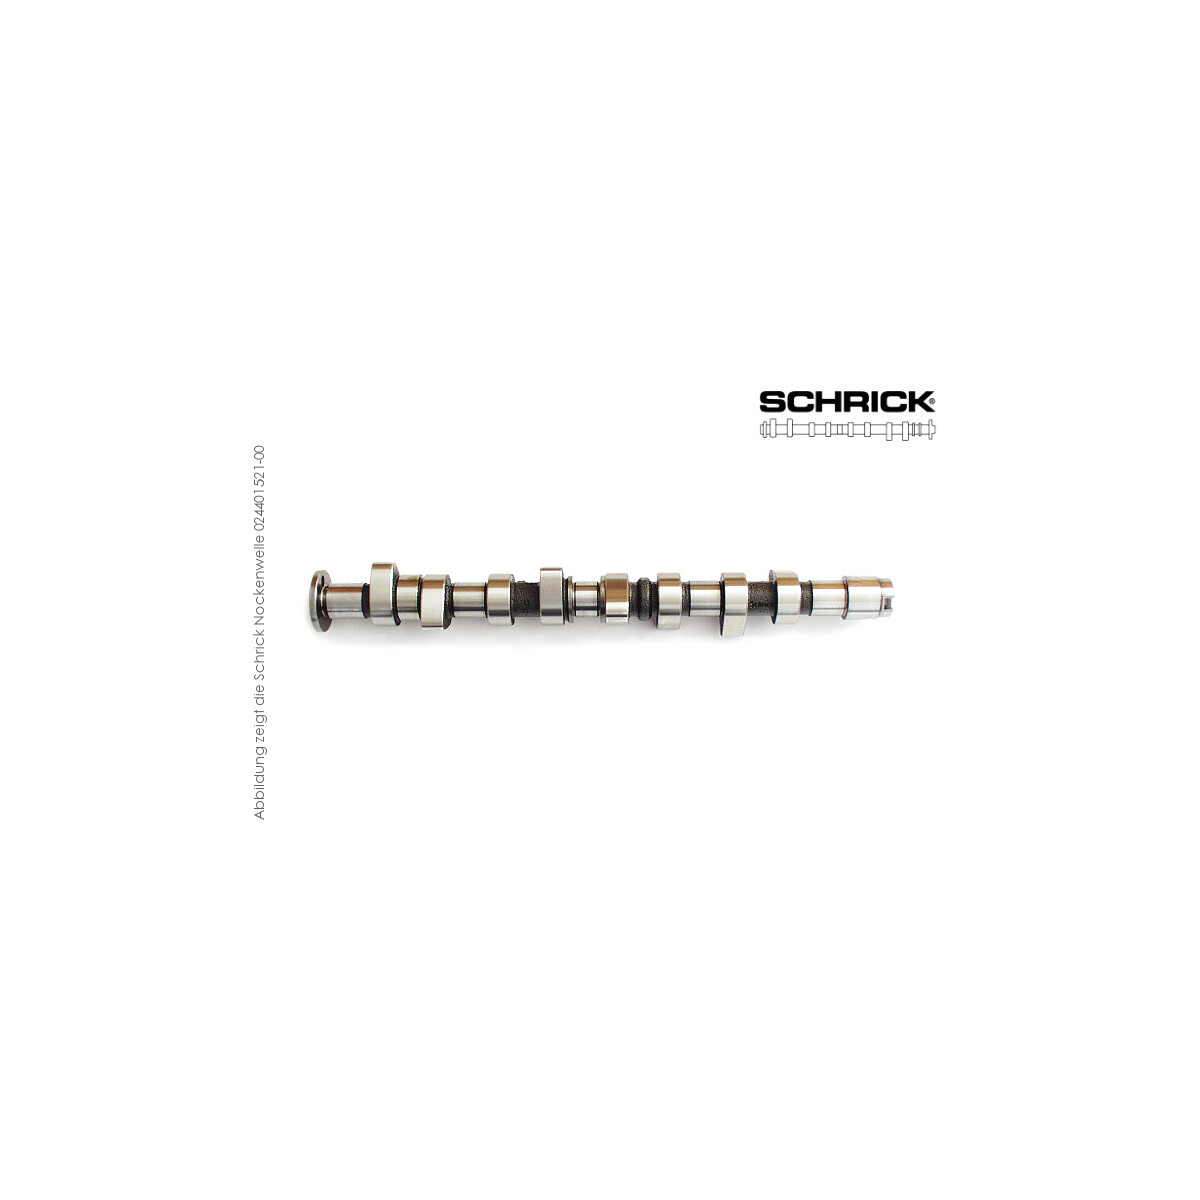 Schrick Nockenwelle für BMW M3 E36 | 3,2L 24V 6-Zyl. S50, S52  | 308° Auslassnockenwelle (Schrick 0284A1080-1V2)